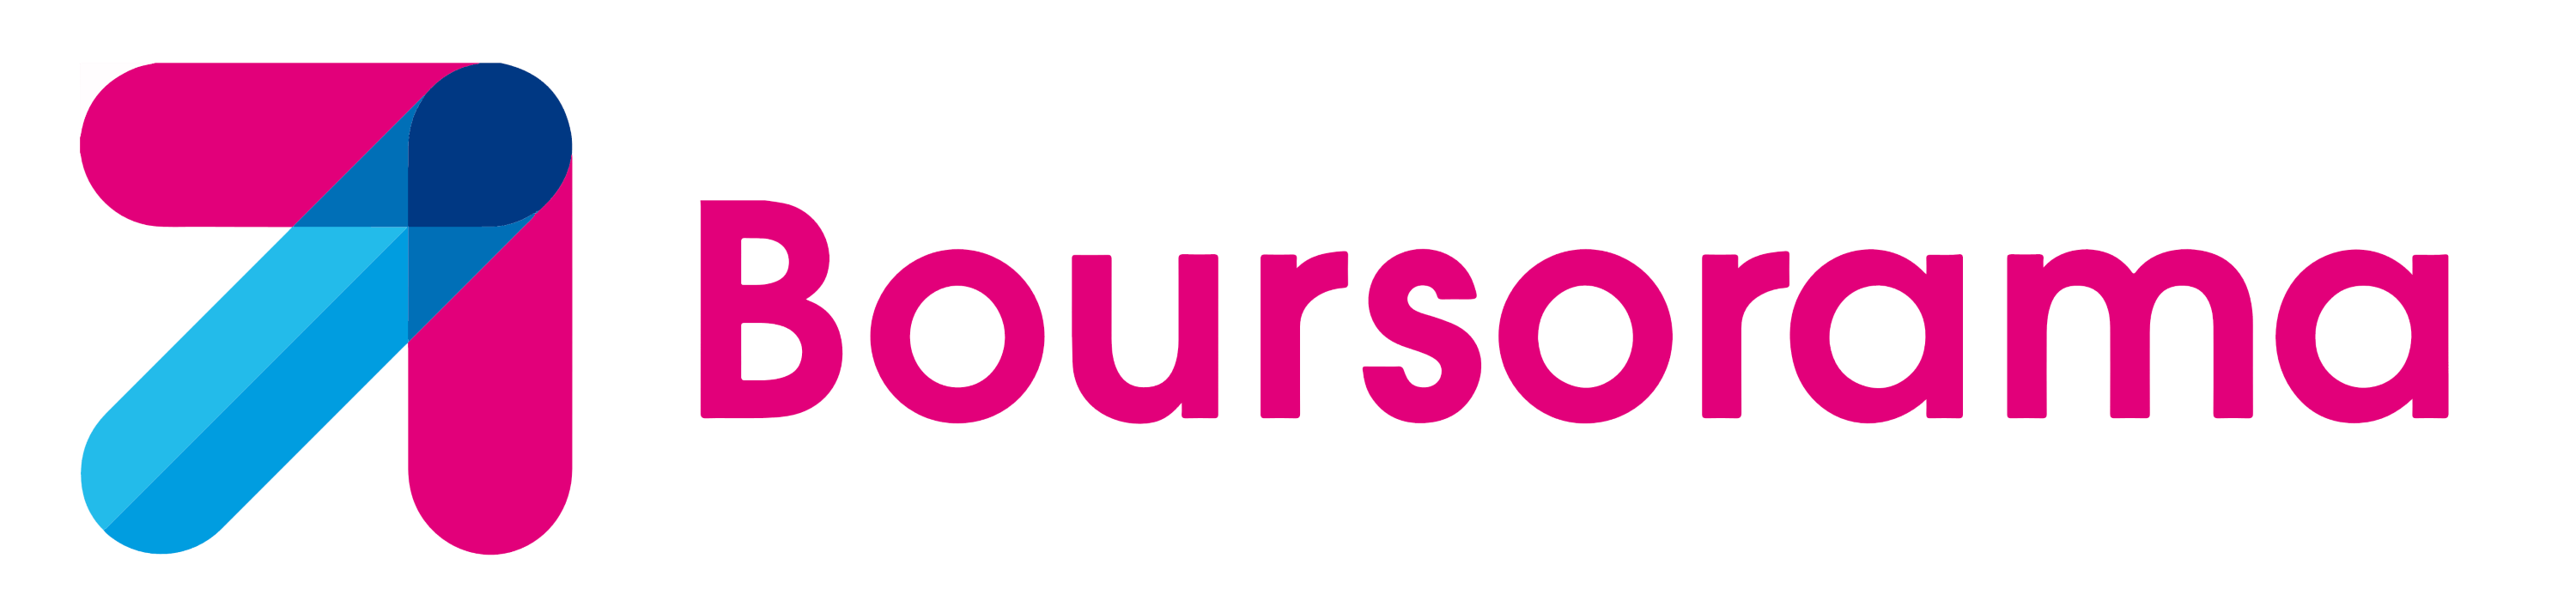 Boursorama logo, logotype